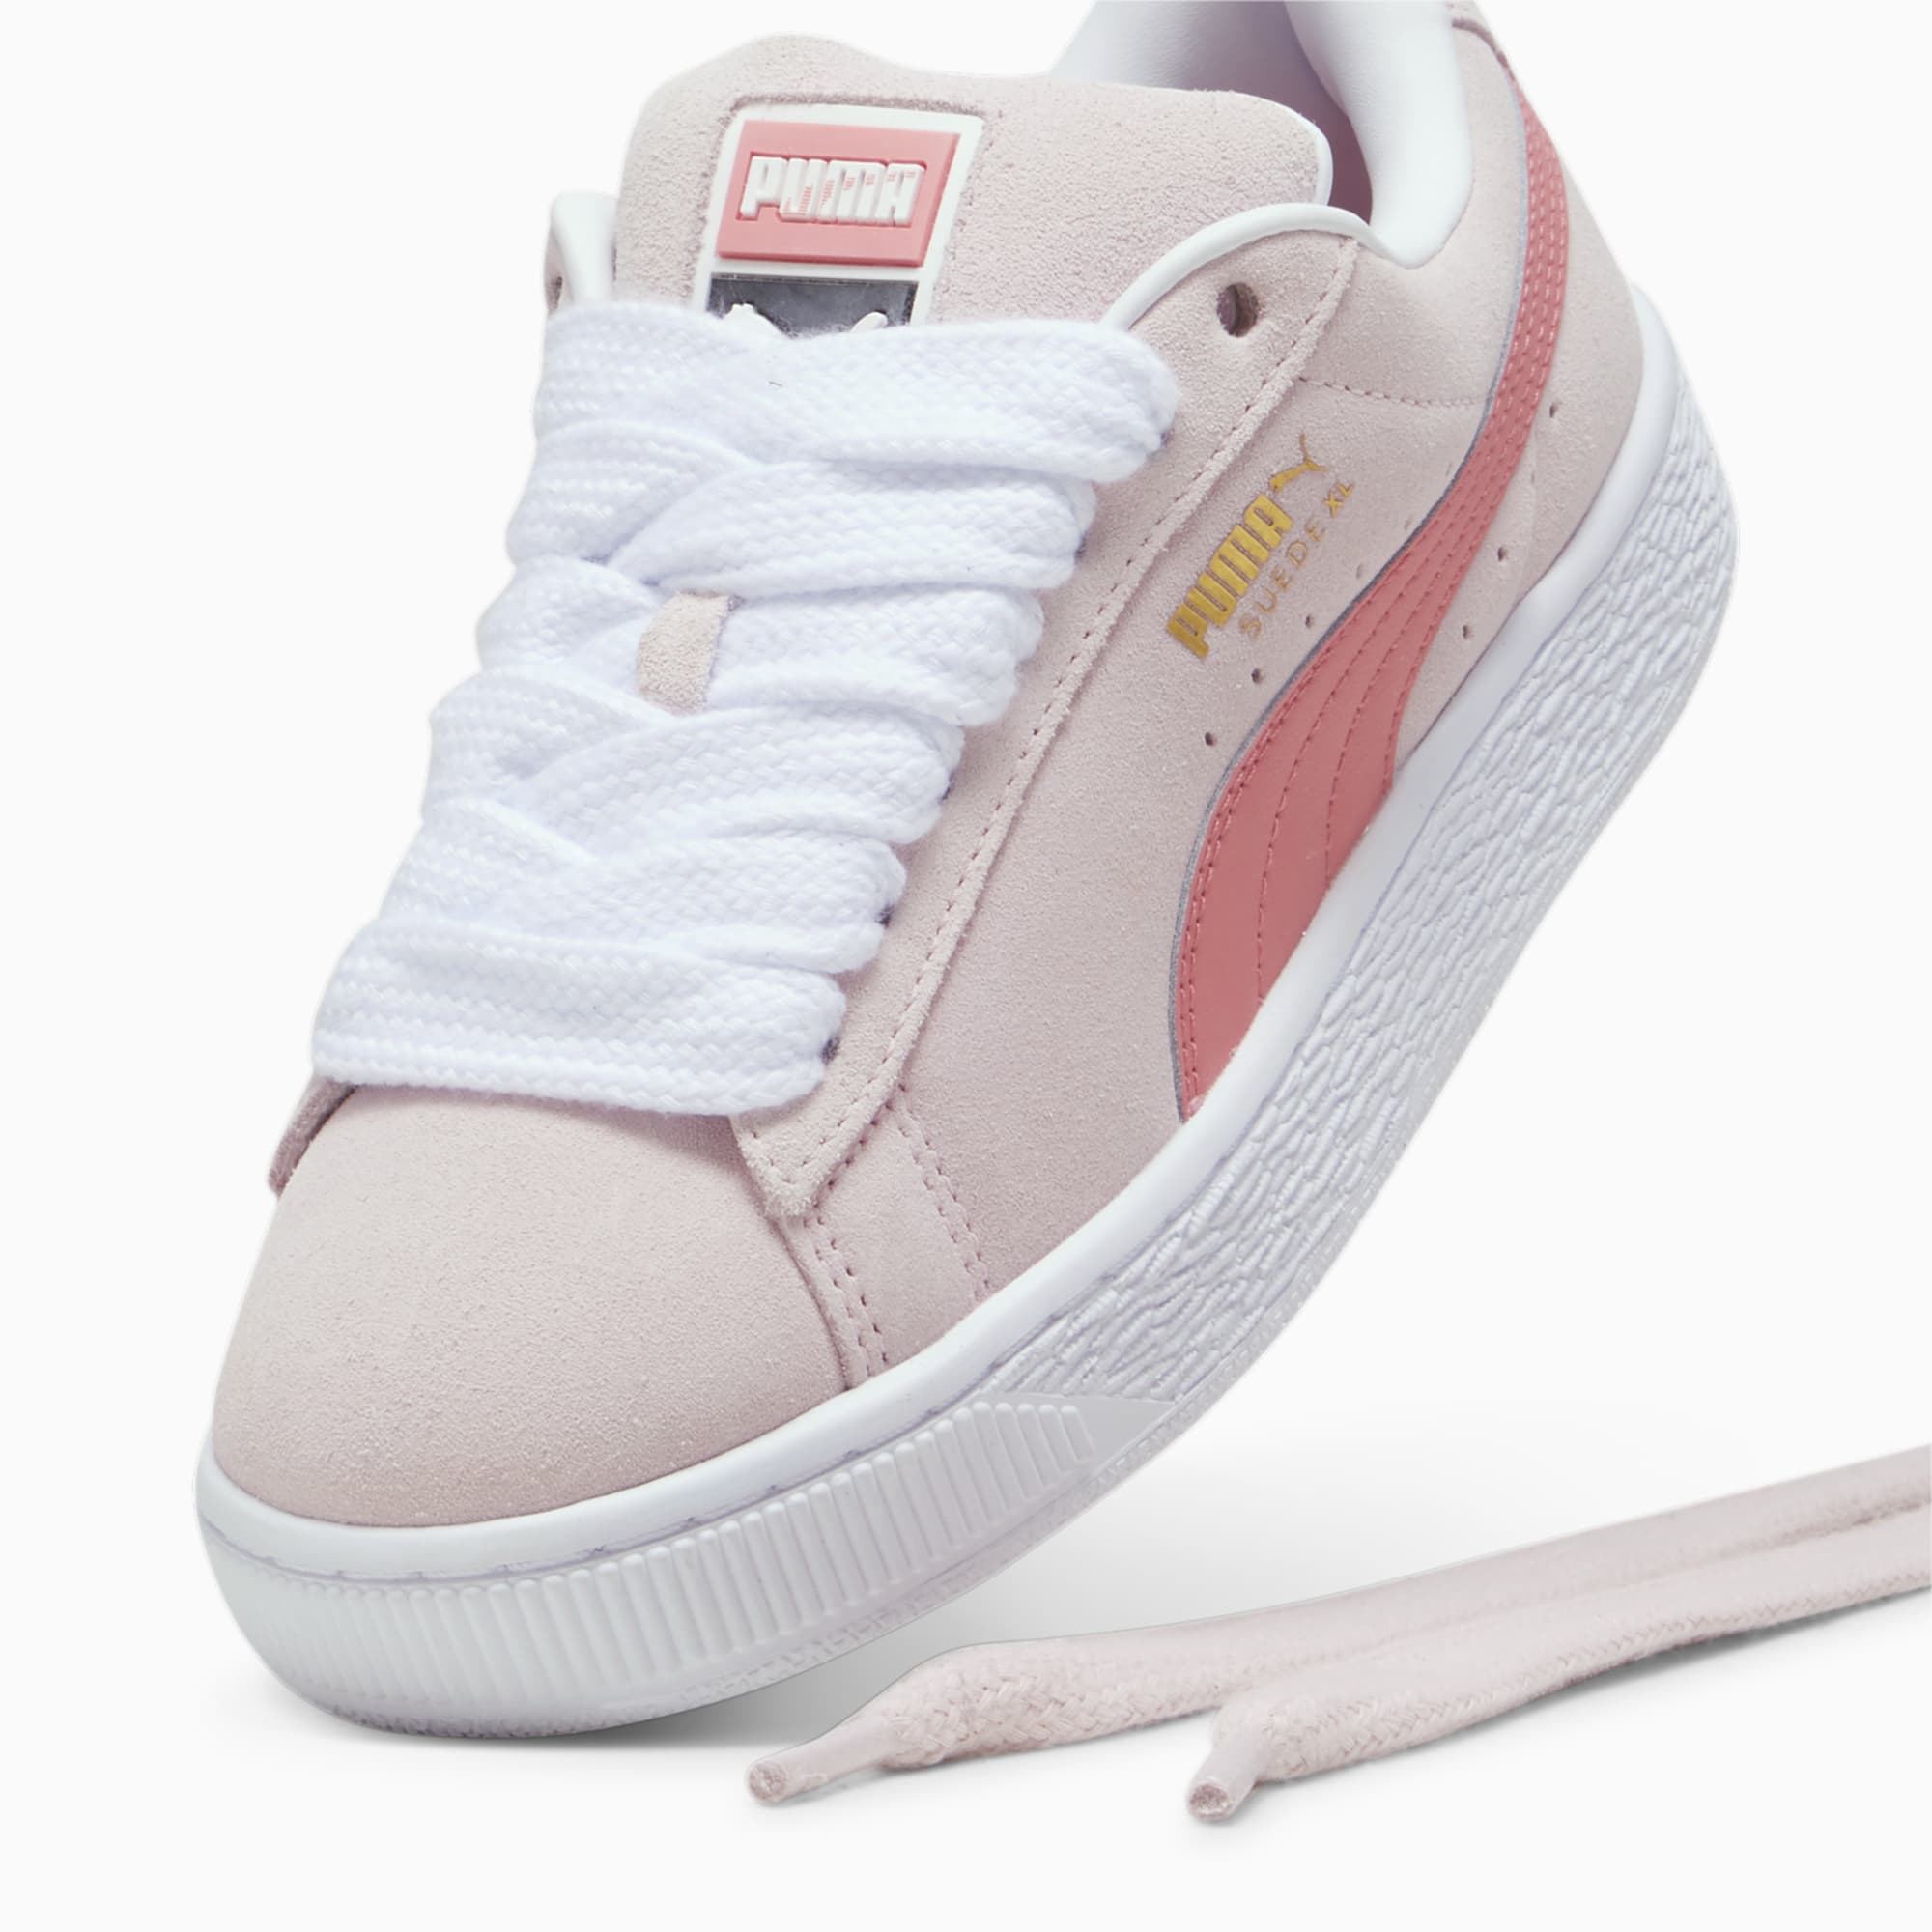 PUMA Suede XL Sneakers Teenager Schuhe, Weiß, Größe: 35.5, Schuhe